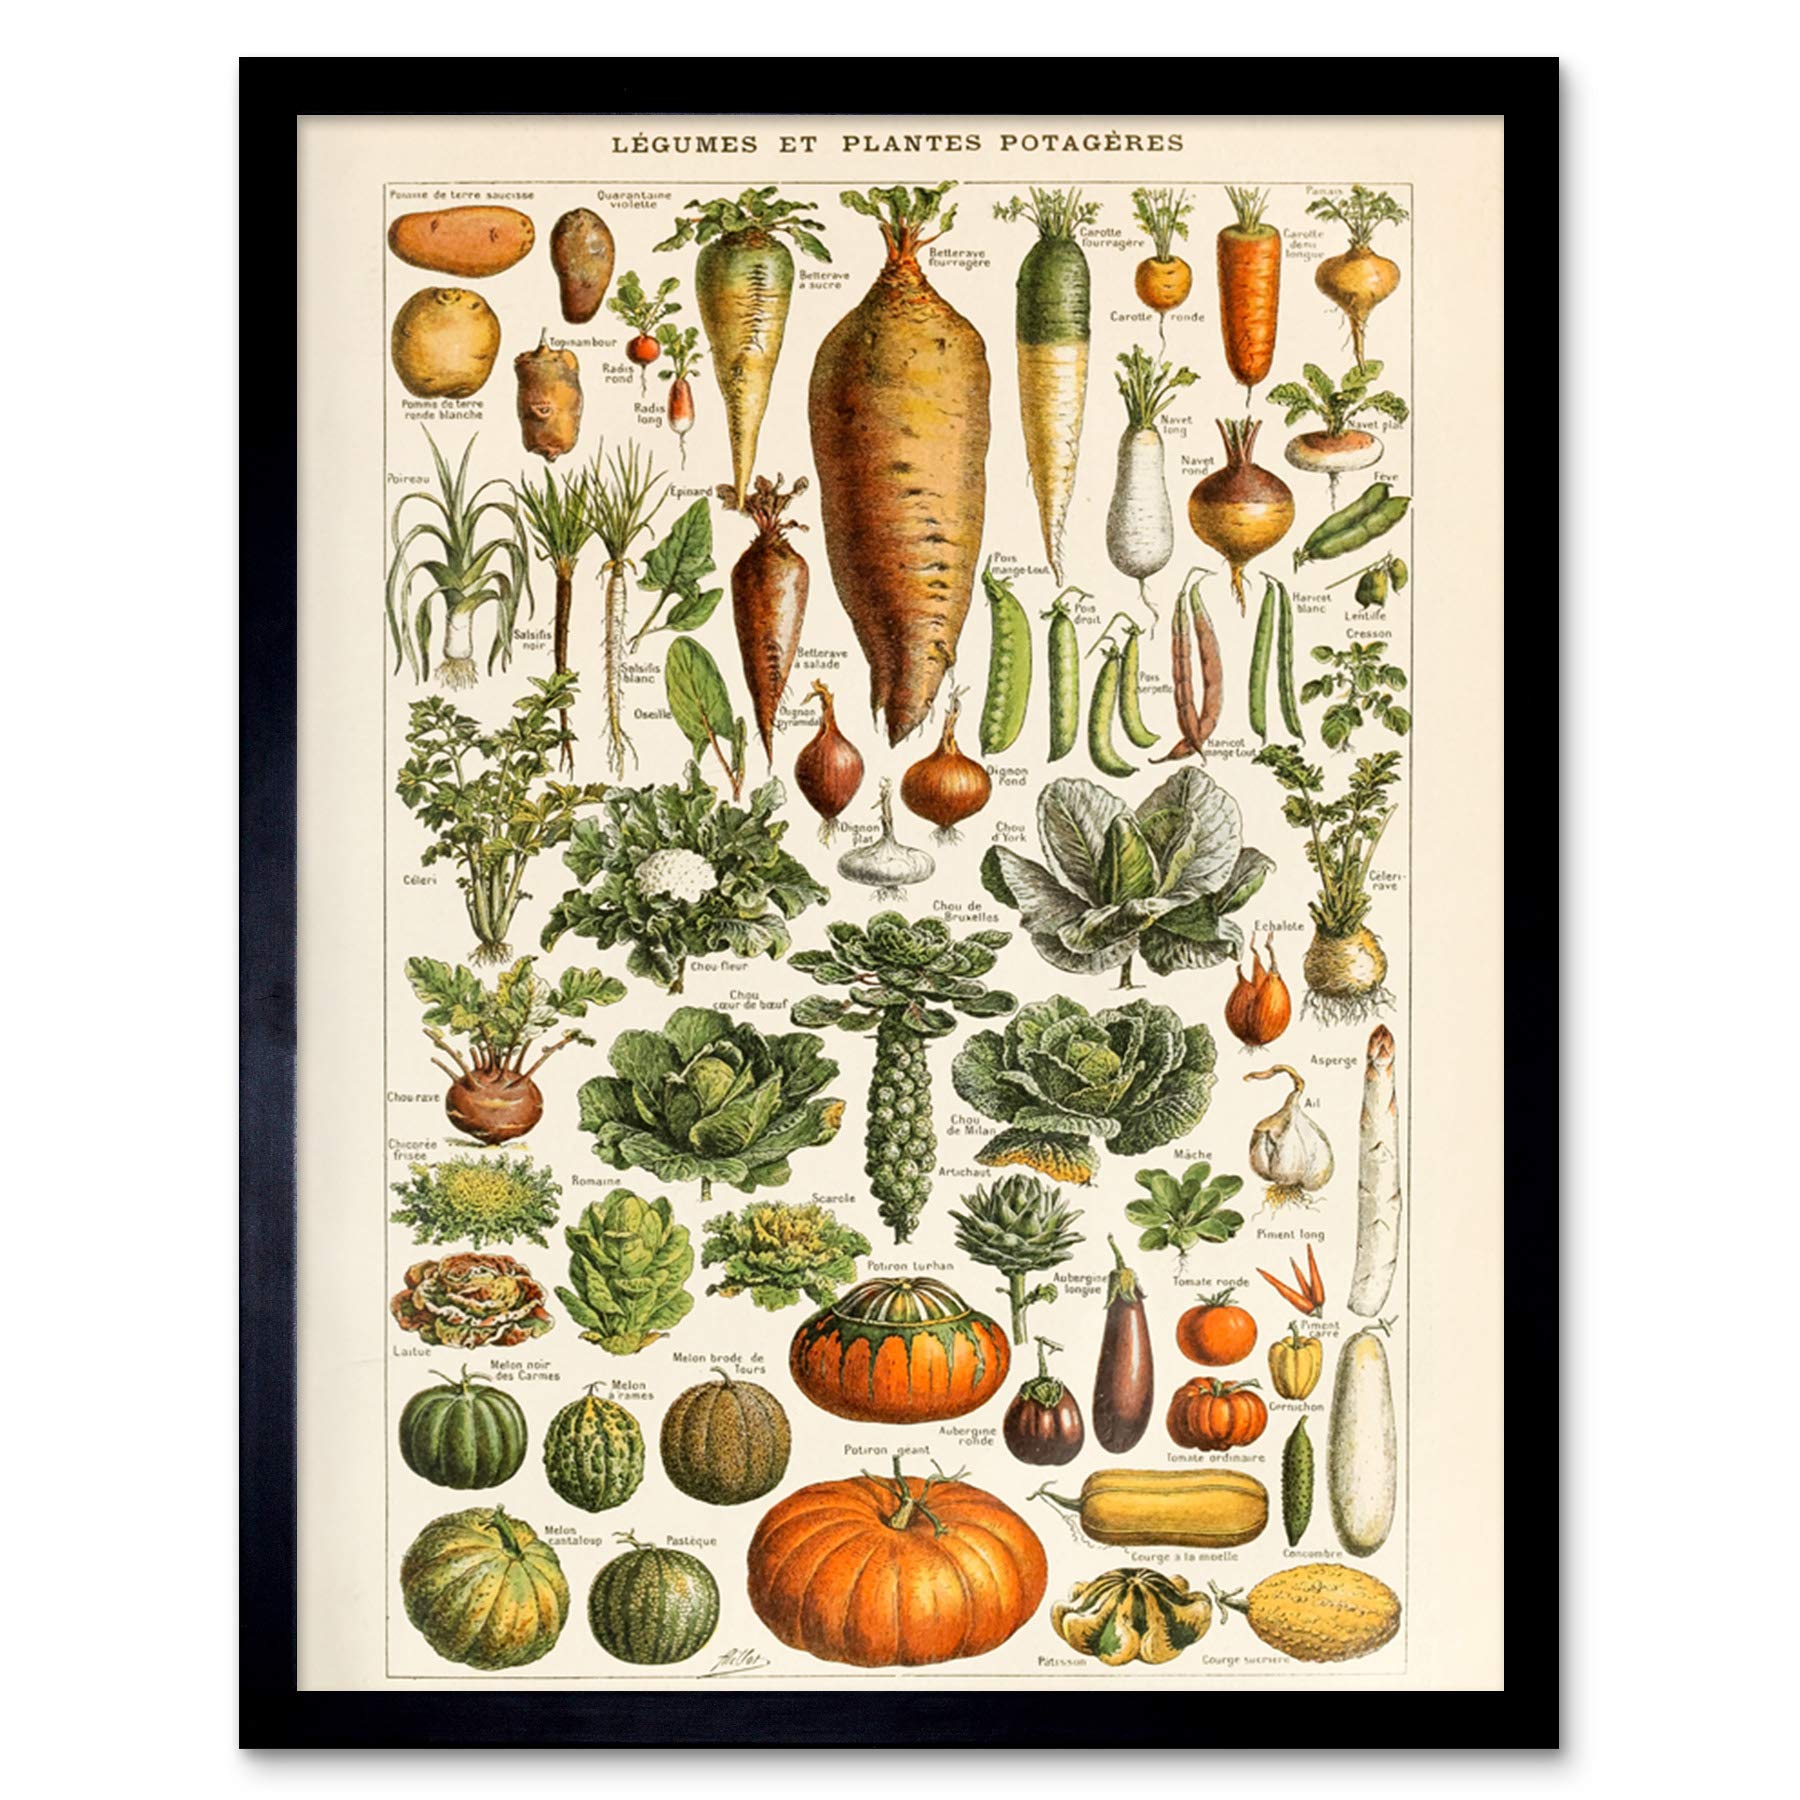 Millot Encyclopedia Page Vegetables Legumes Art Print Framed Poster Wall Decor 12x16 inch Seite Wand Deko